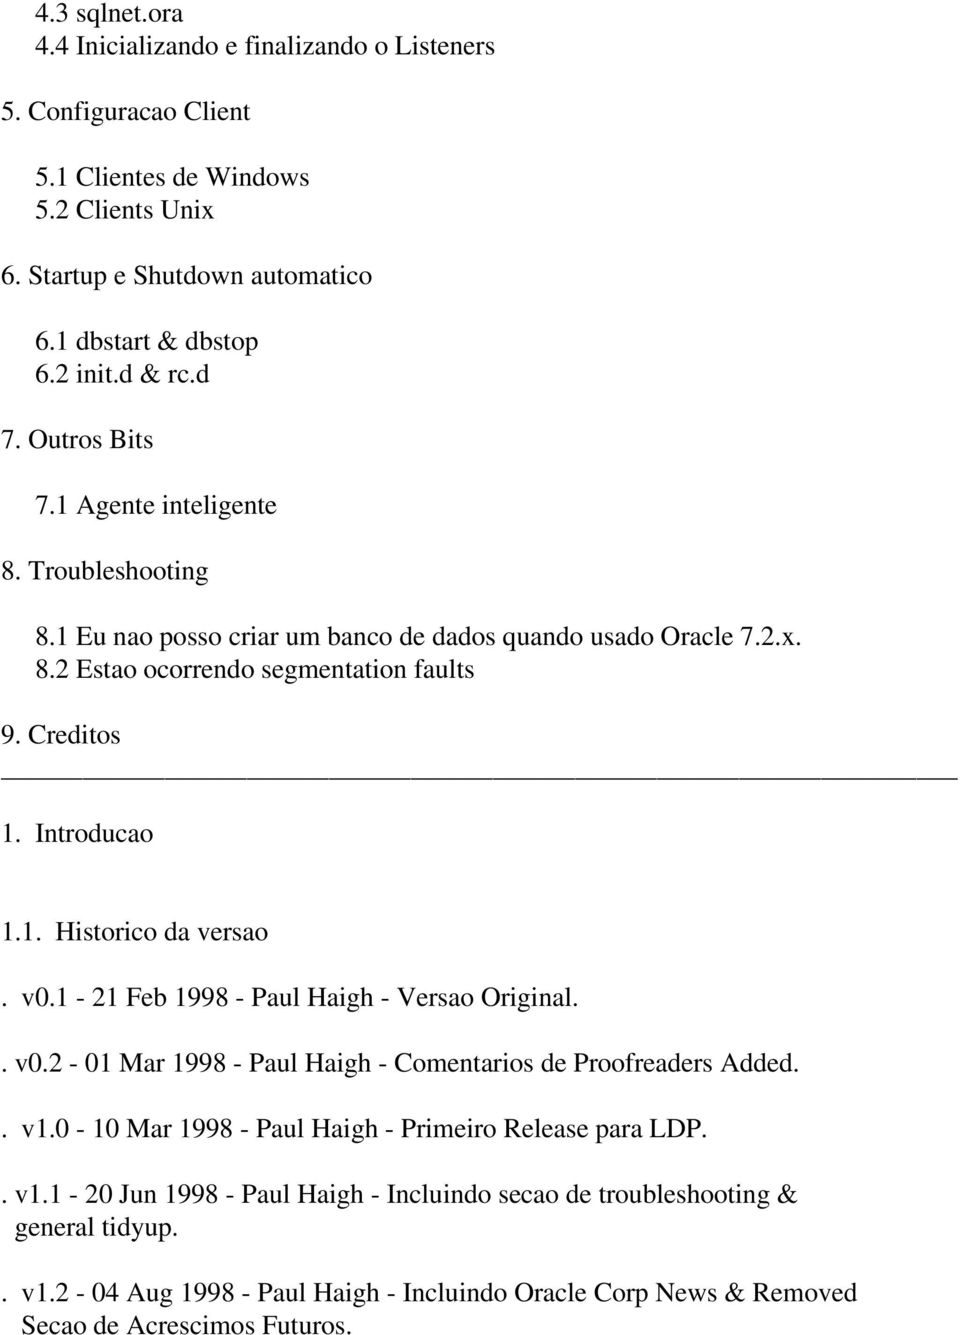 Introducao 1.1. Historico da versao. v0.1-21 Feb 1998 - Paul Haigh - Versao Original.. v0.2-01 Mar 1998 - Paul Haigh - Comentarios de Proofreaders Added.. v1.